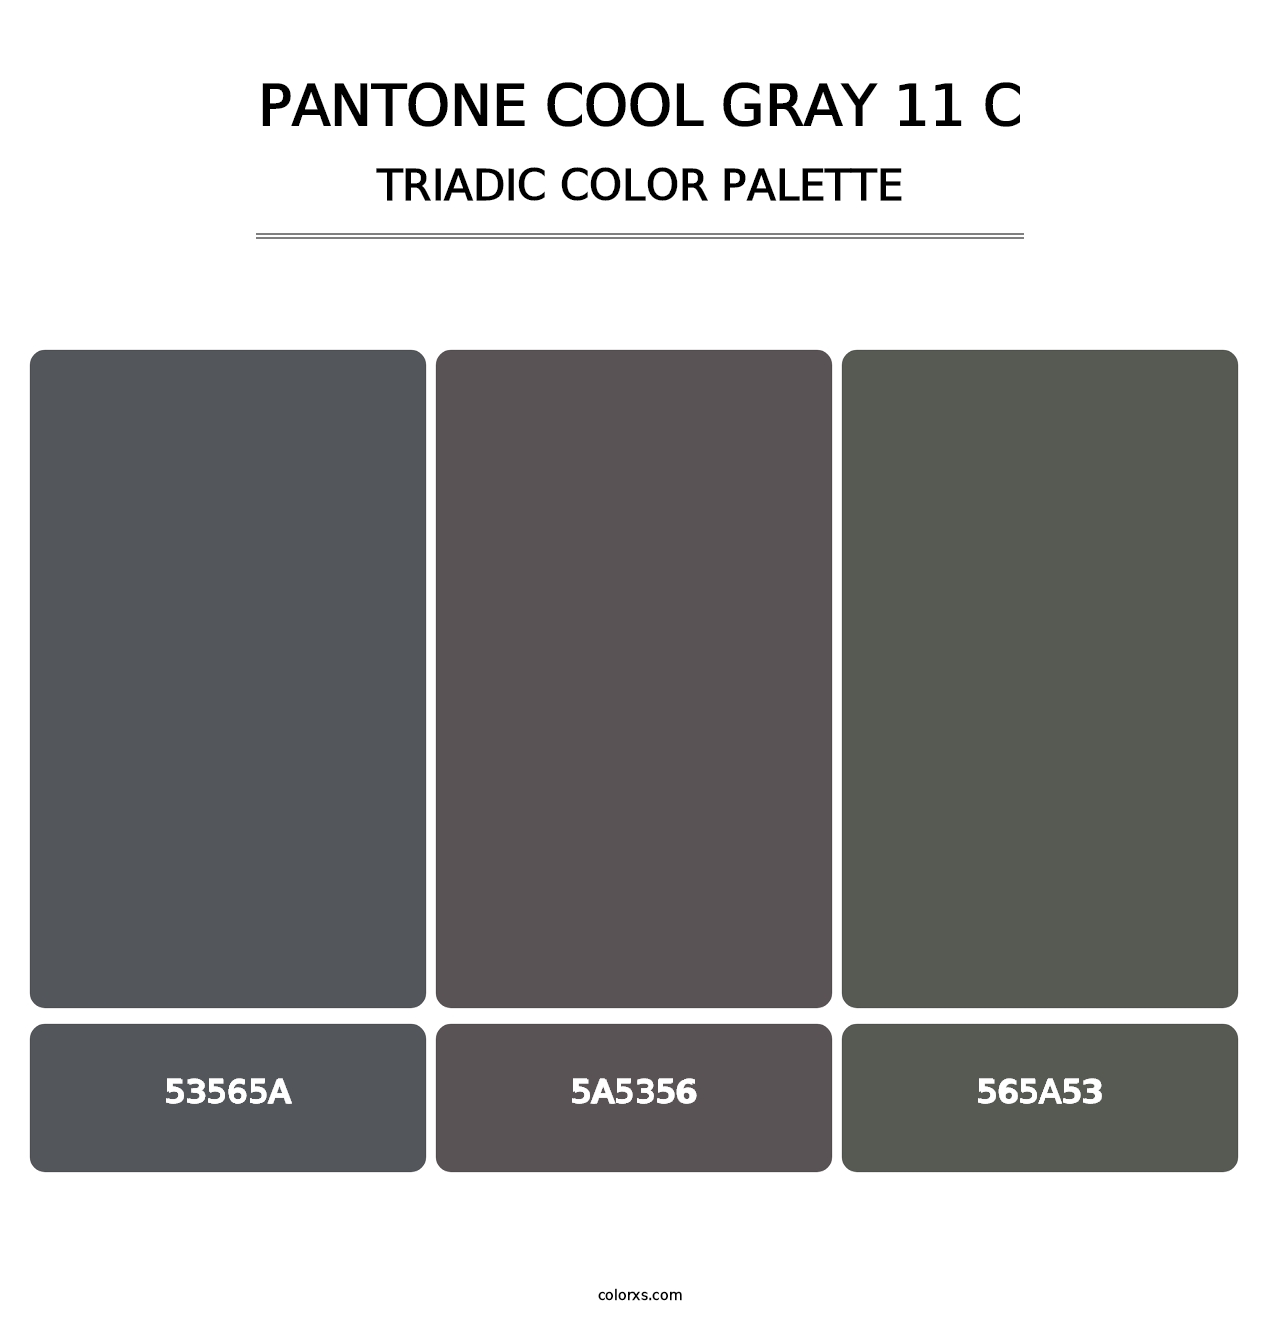 PANTONE Cool Gray 11 C - Triadic Color Palette